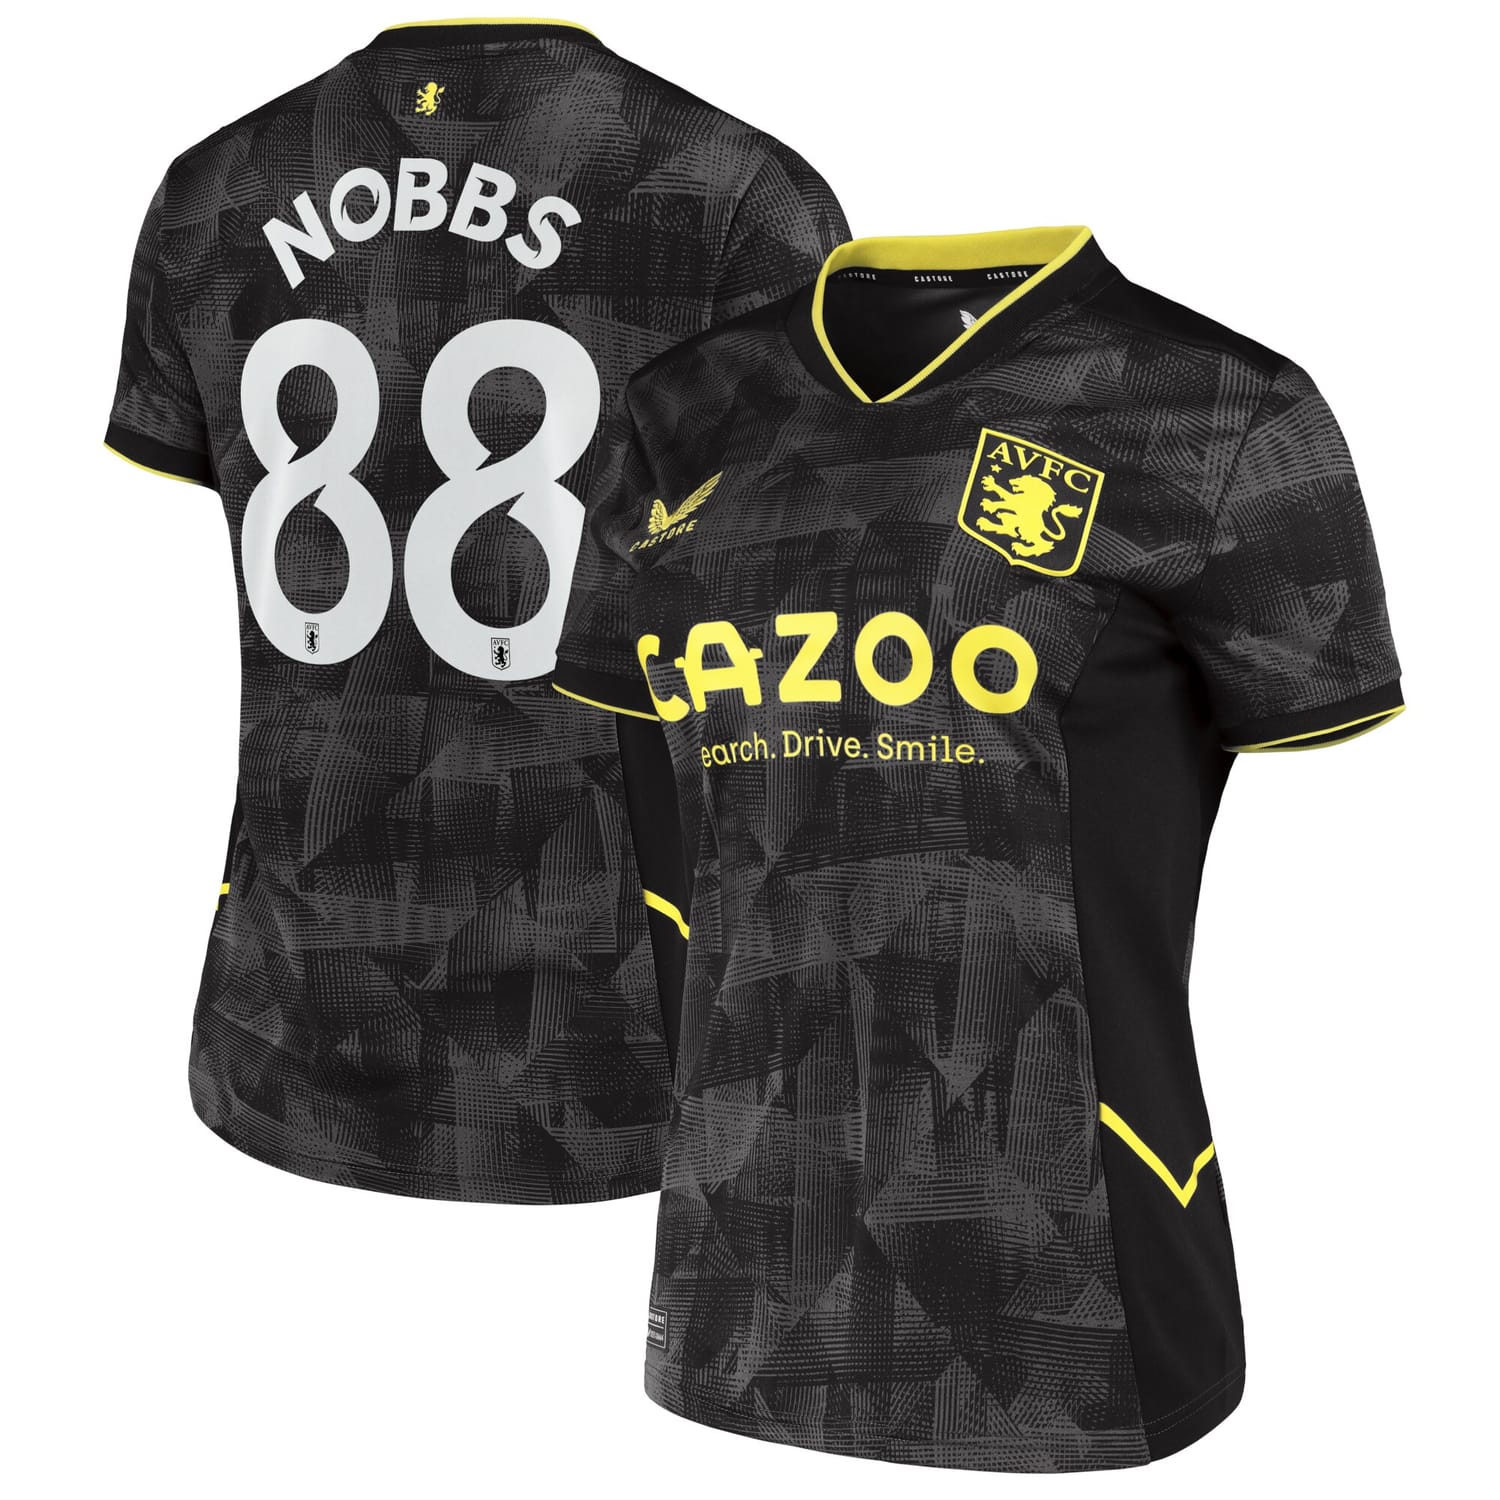 Premier League Aston Villa Third Cup Jersey Shirt 2022-23 player Jordan Nobbs 88 printing for Women